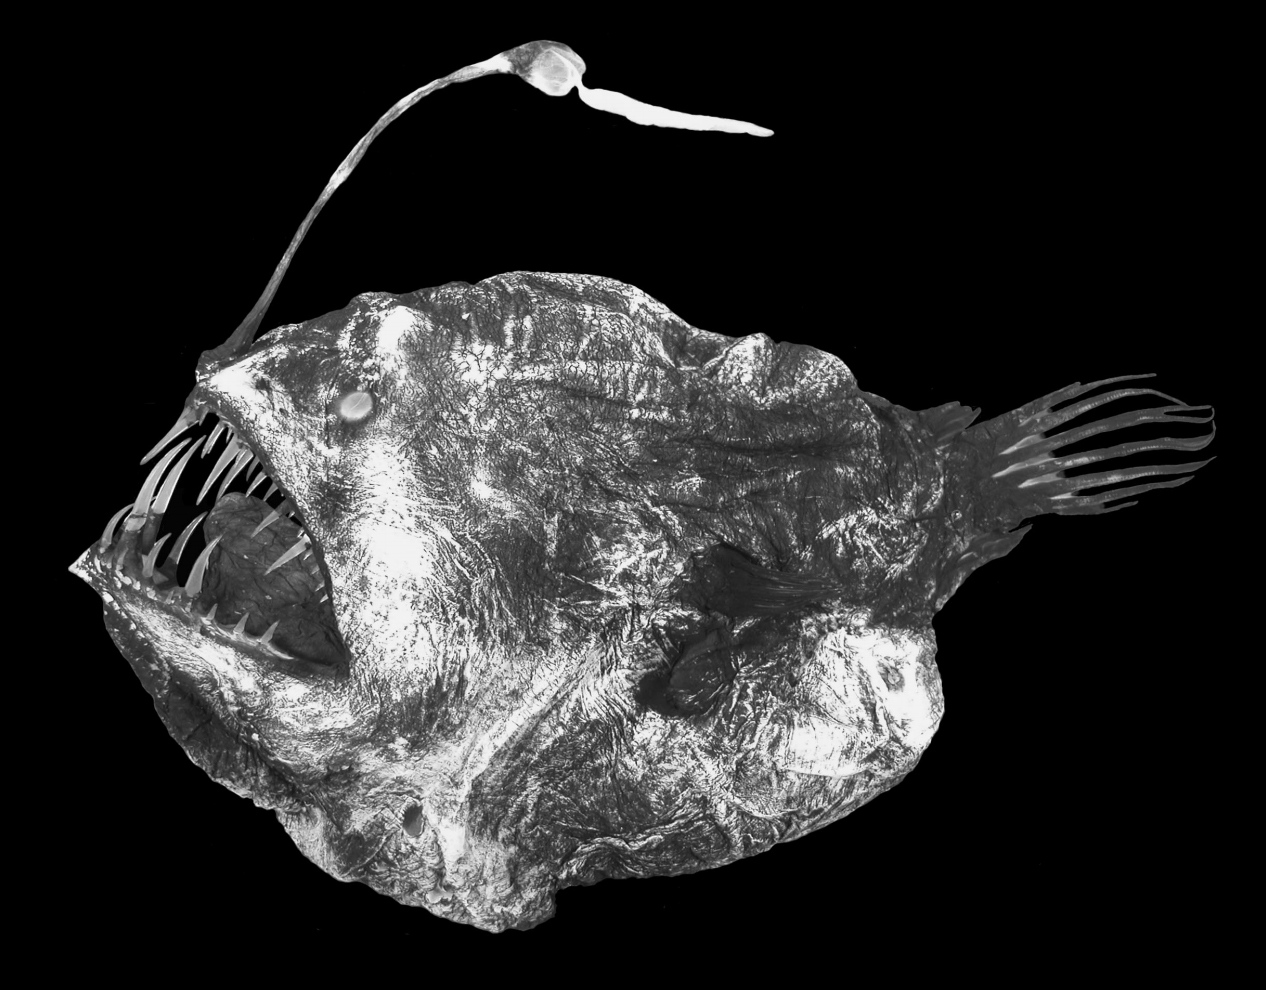 Fossil fo the deep sea anglerfish, Acentrophryne dolichonema. (Peitsch & Shimazaki, Copeia, 2005)